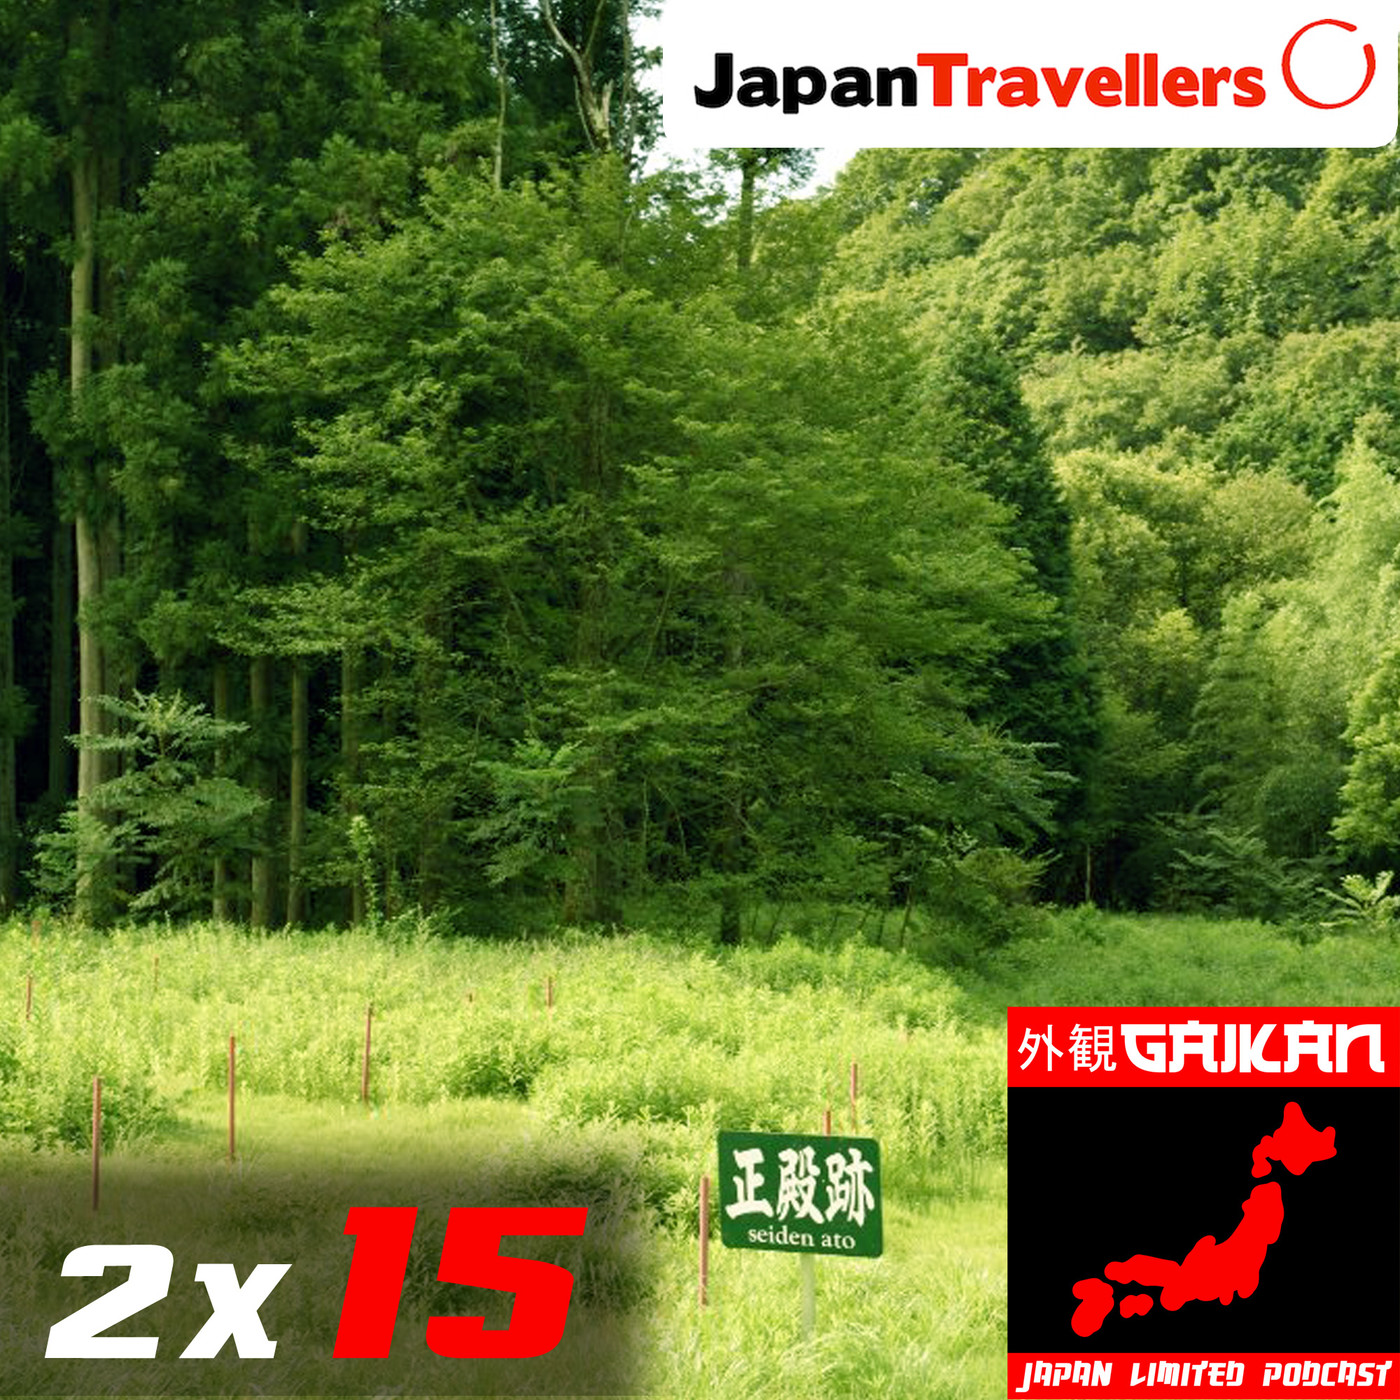 Podcast de Japón - GAIKAN Japan Limited Podcast ✈️ Foro Ofertas Comerciales de Viajes